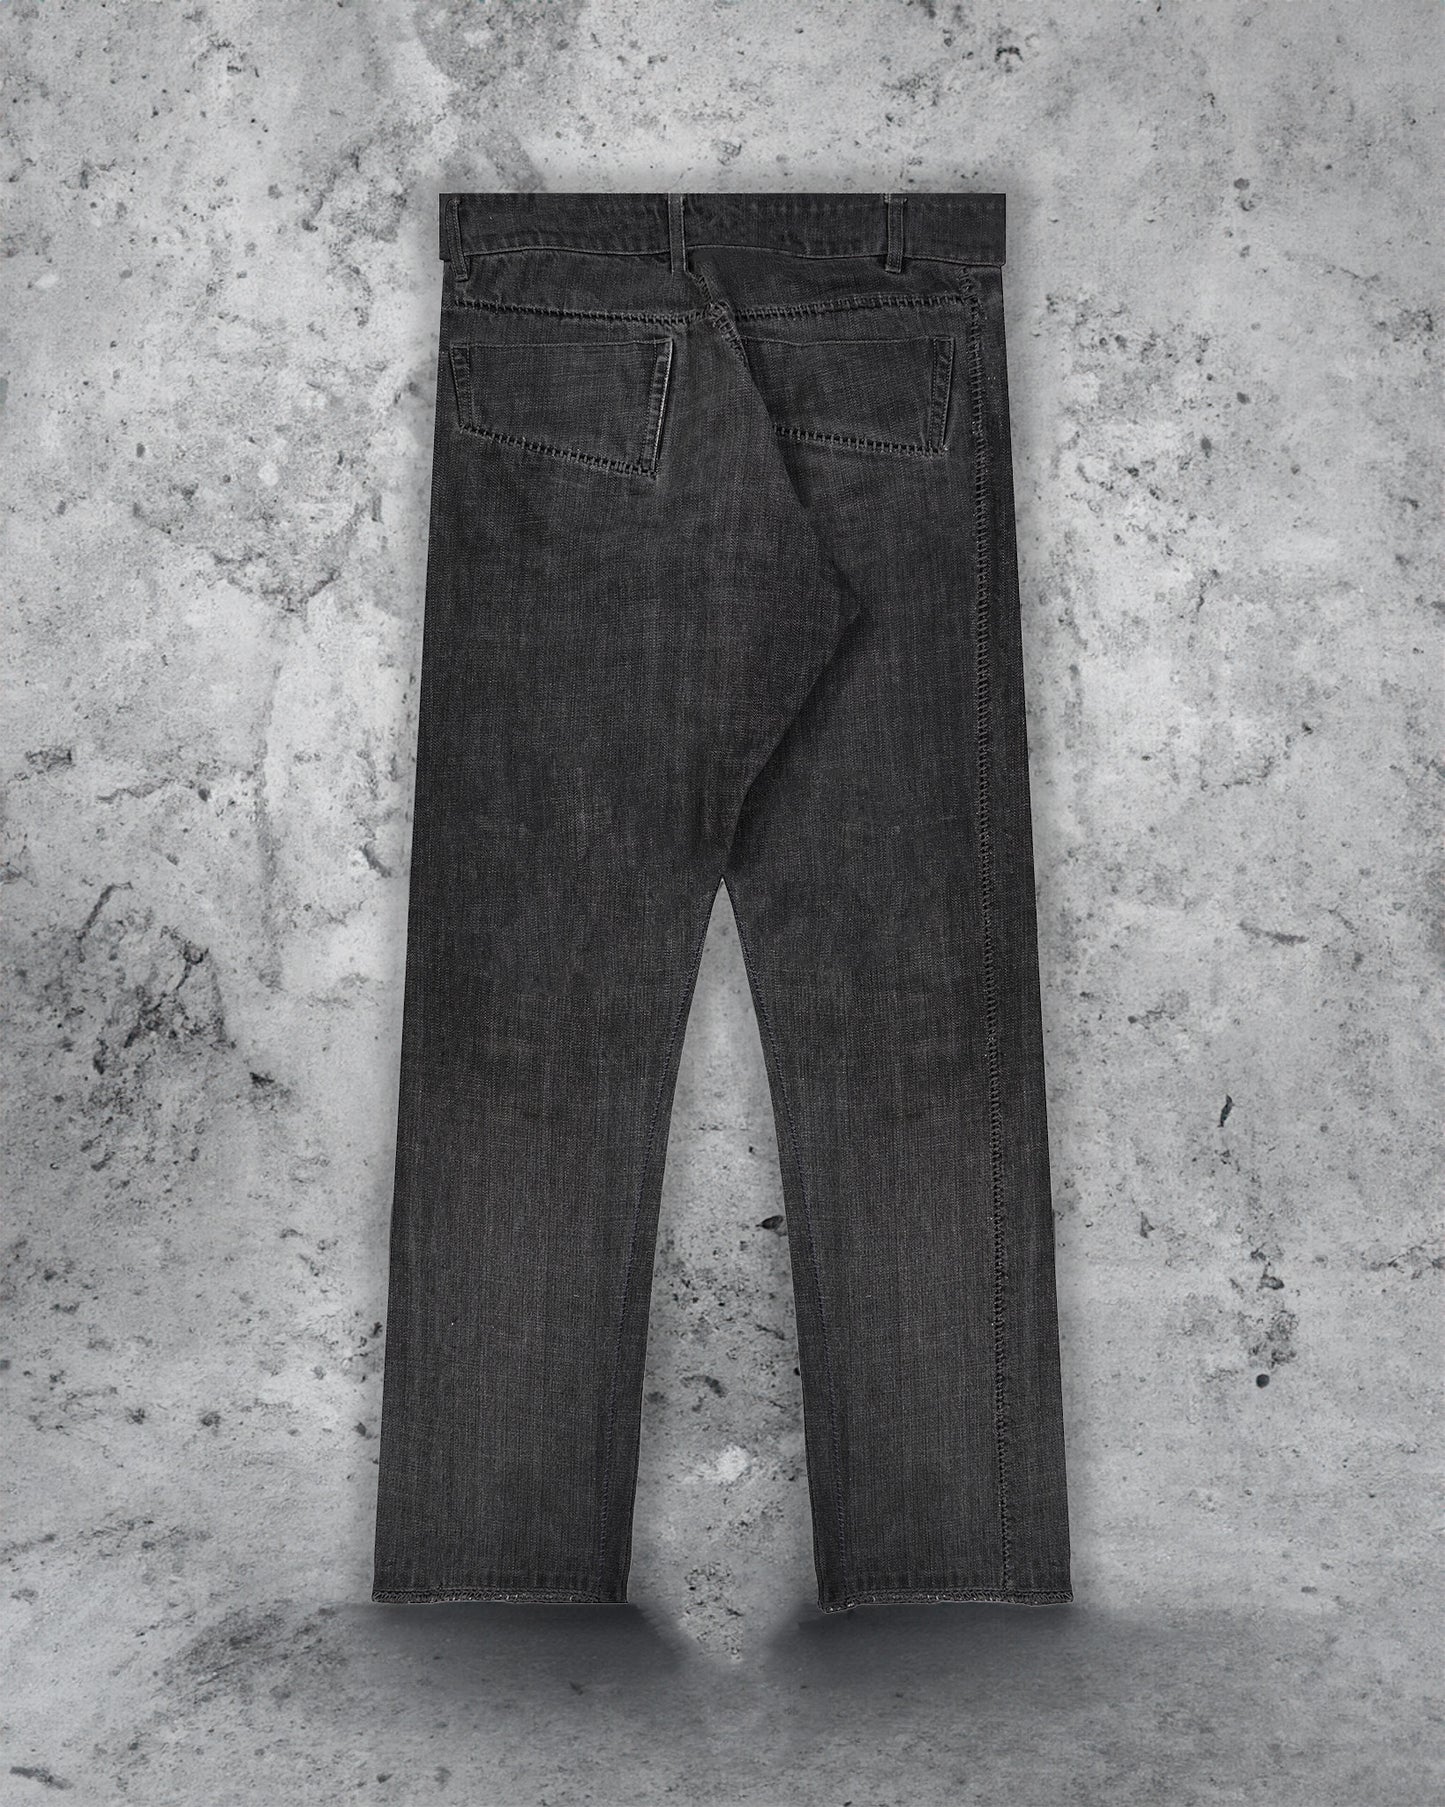 Carol Christian Poell Overlock “Box” Jeans - SS05 “Dispossessed” (JM/2006 KIT-N/10)